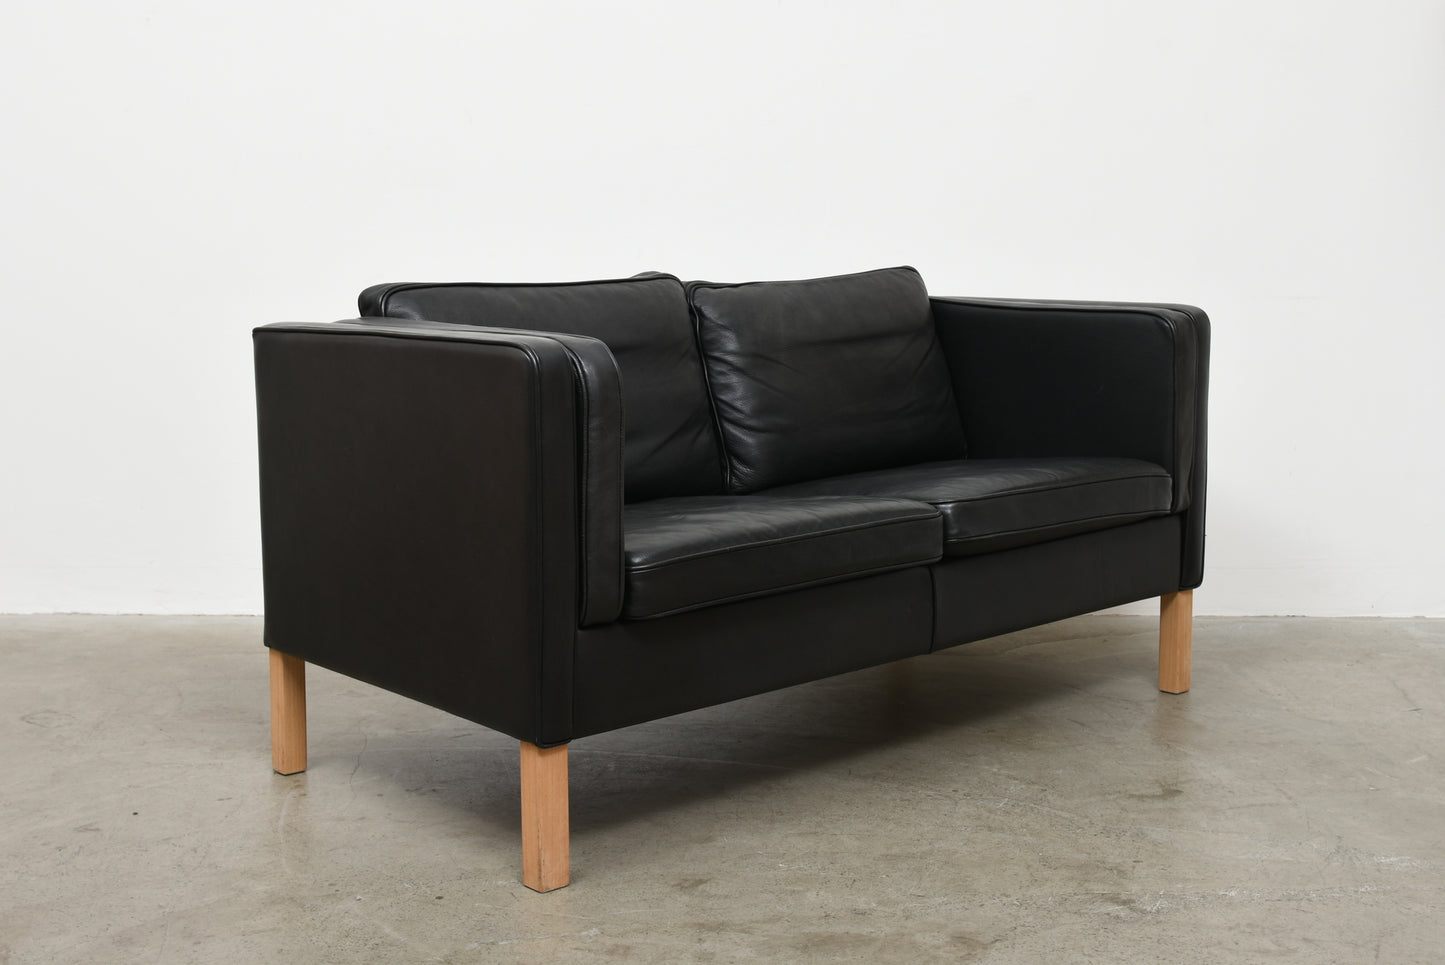 Vintage Danish leather two seat sofa